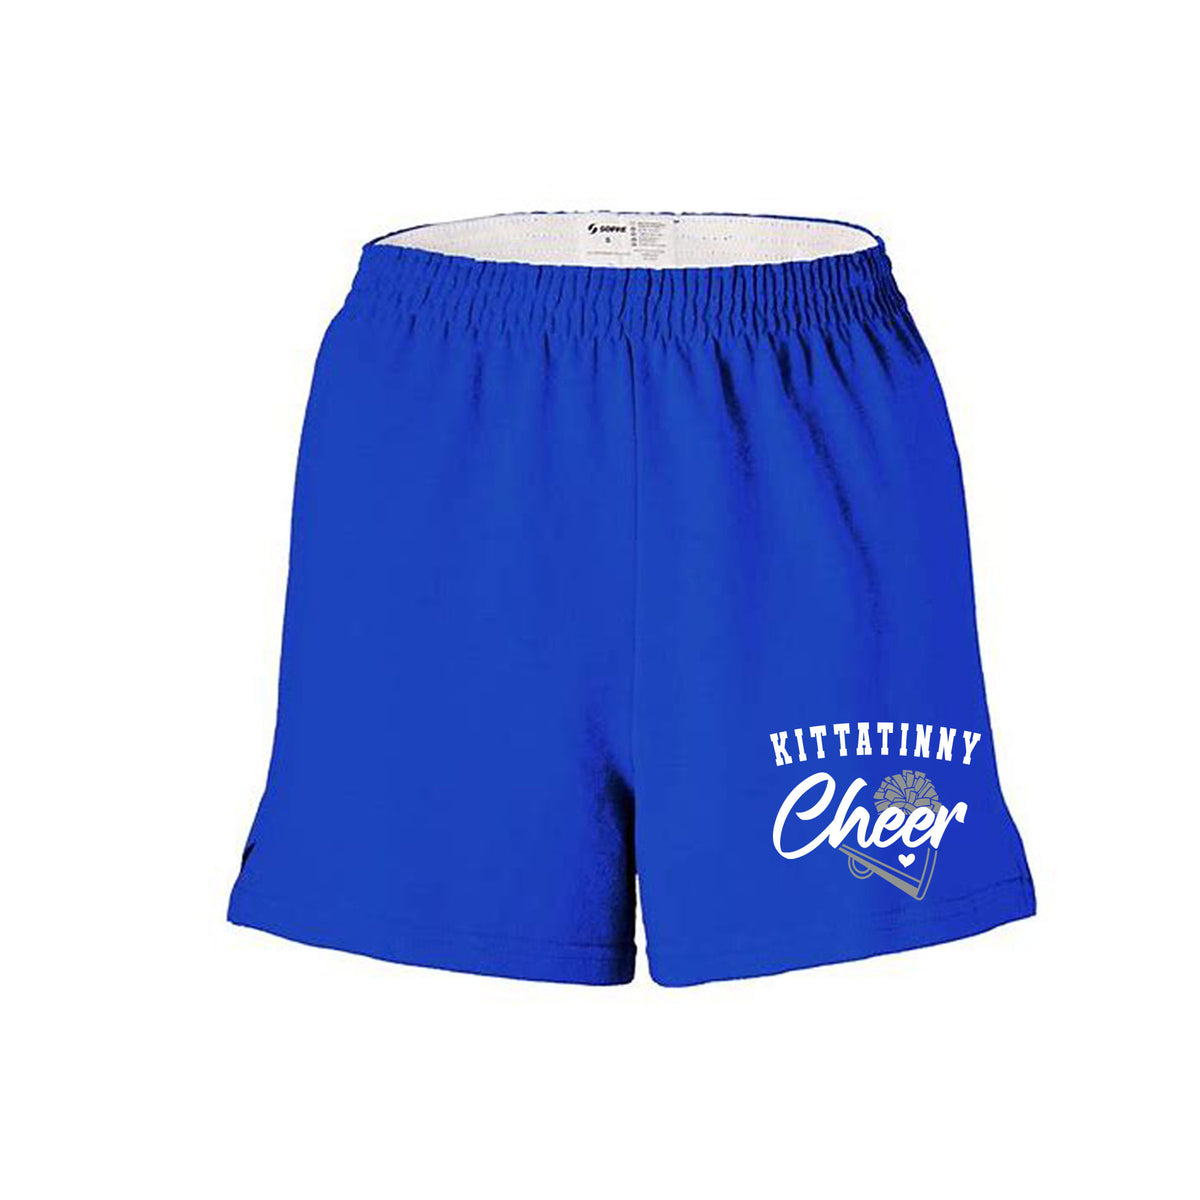 Kittatinny Cheer girls Shorts Design 9